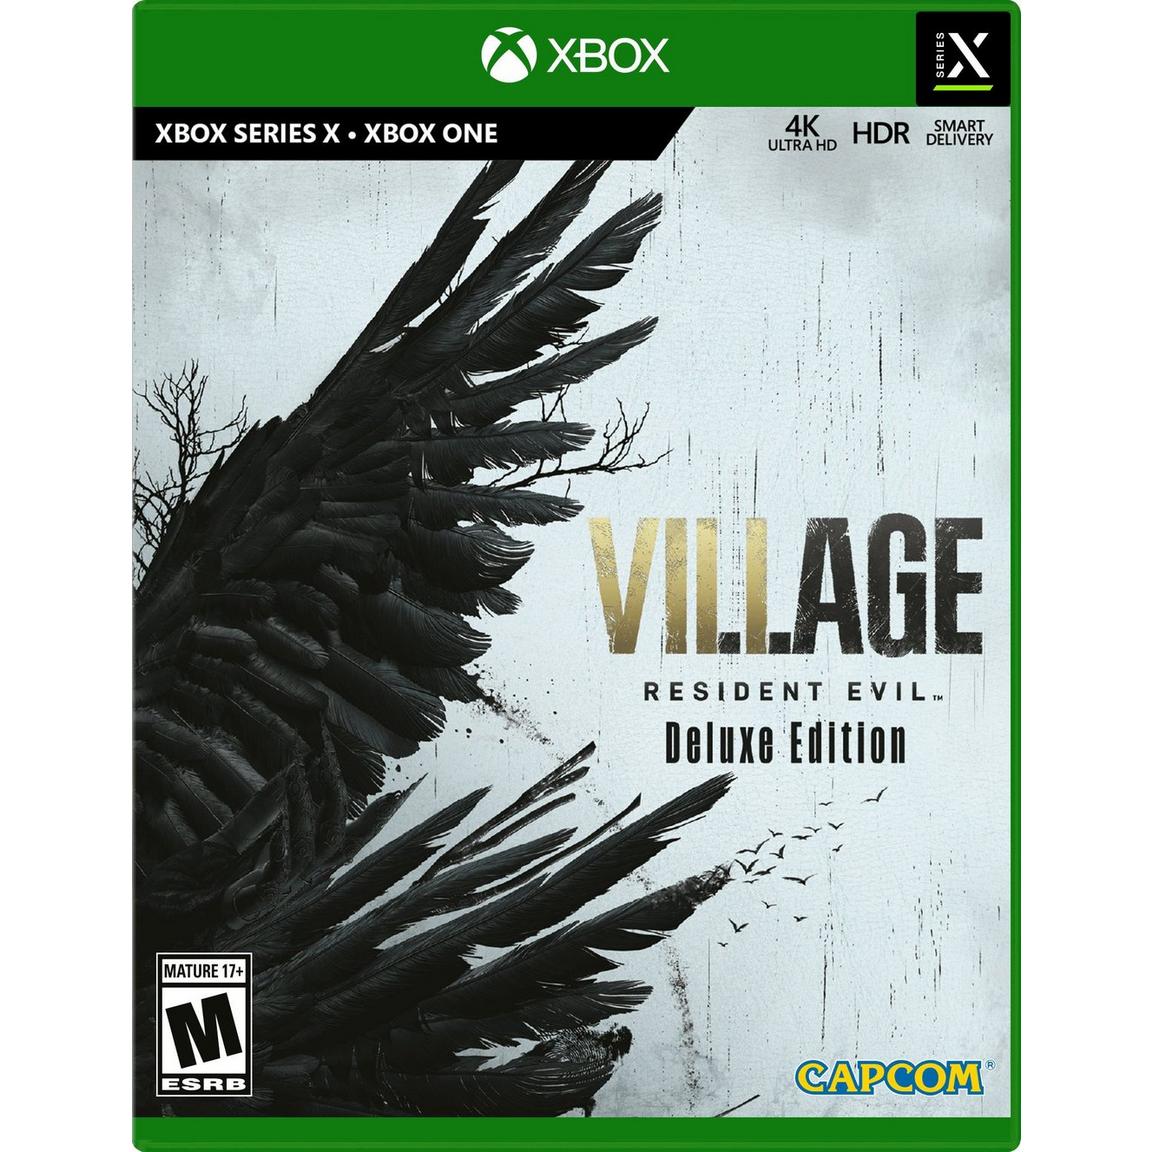 Resident Evil Village Deluxe Edition - Xbox Series X/S -  Capcom, G3Q-01125